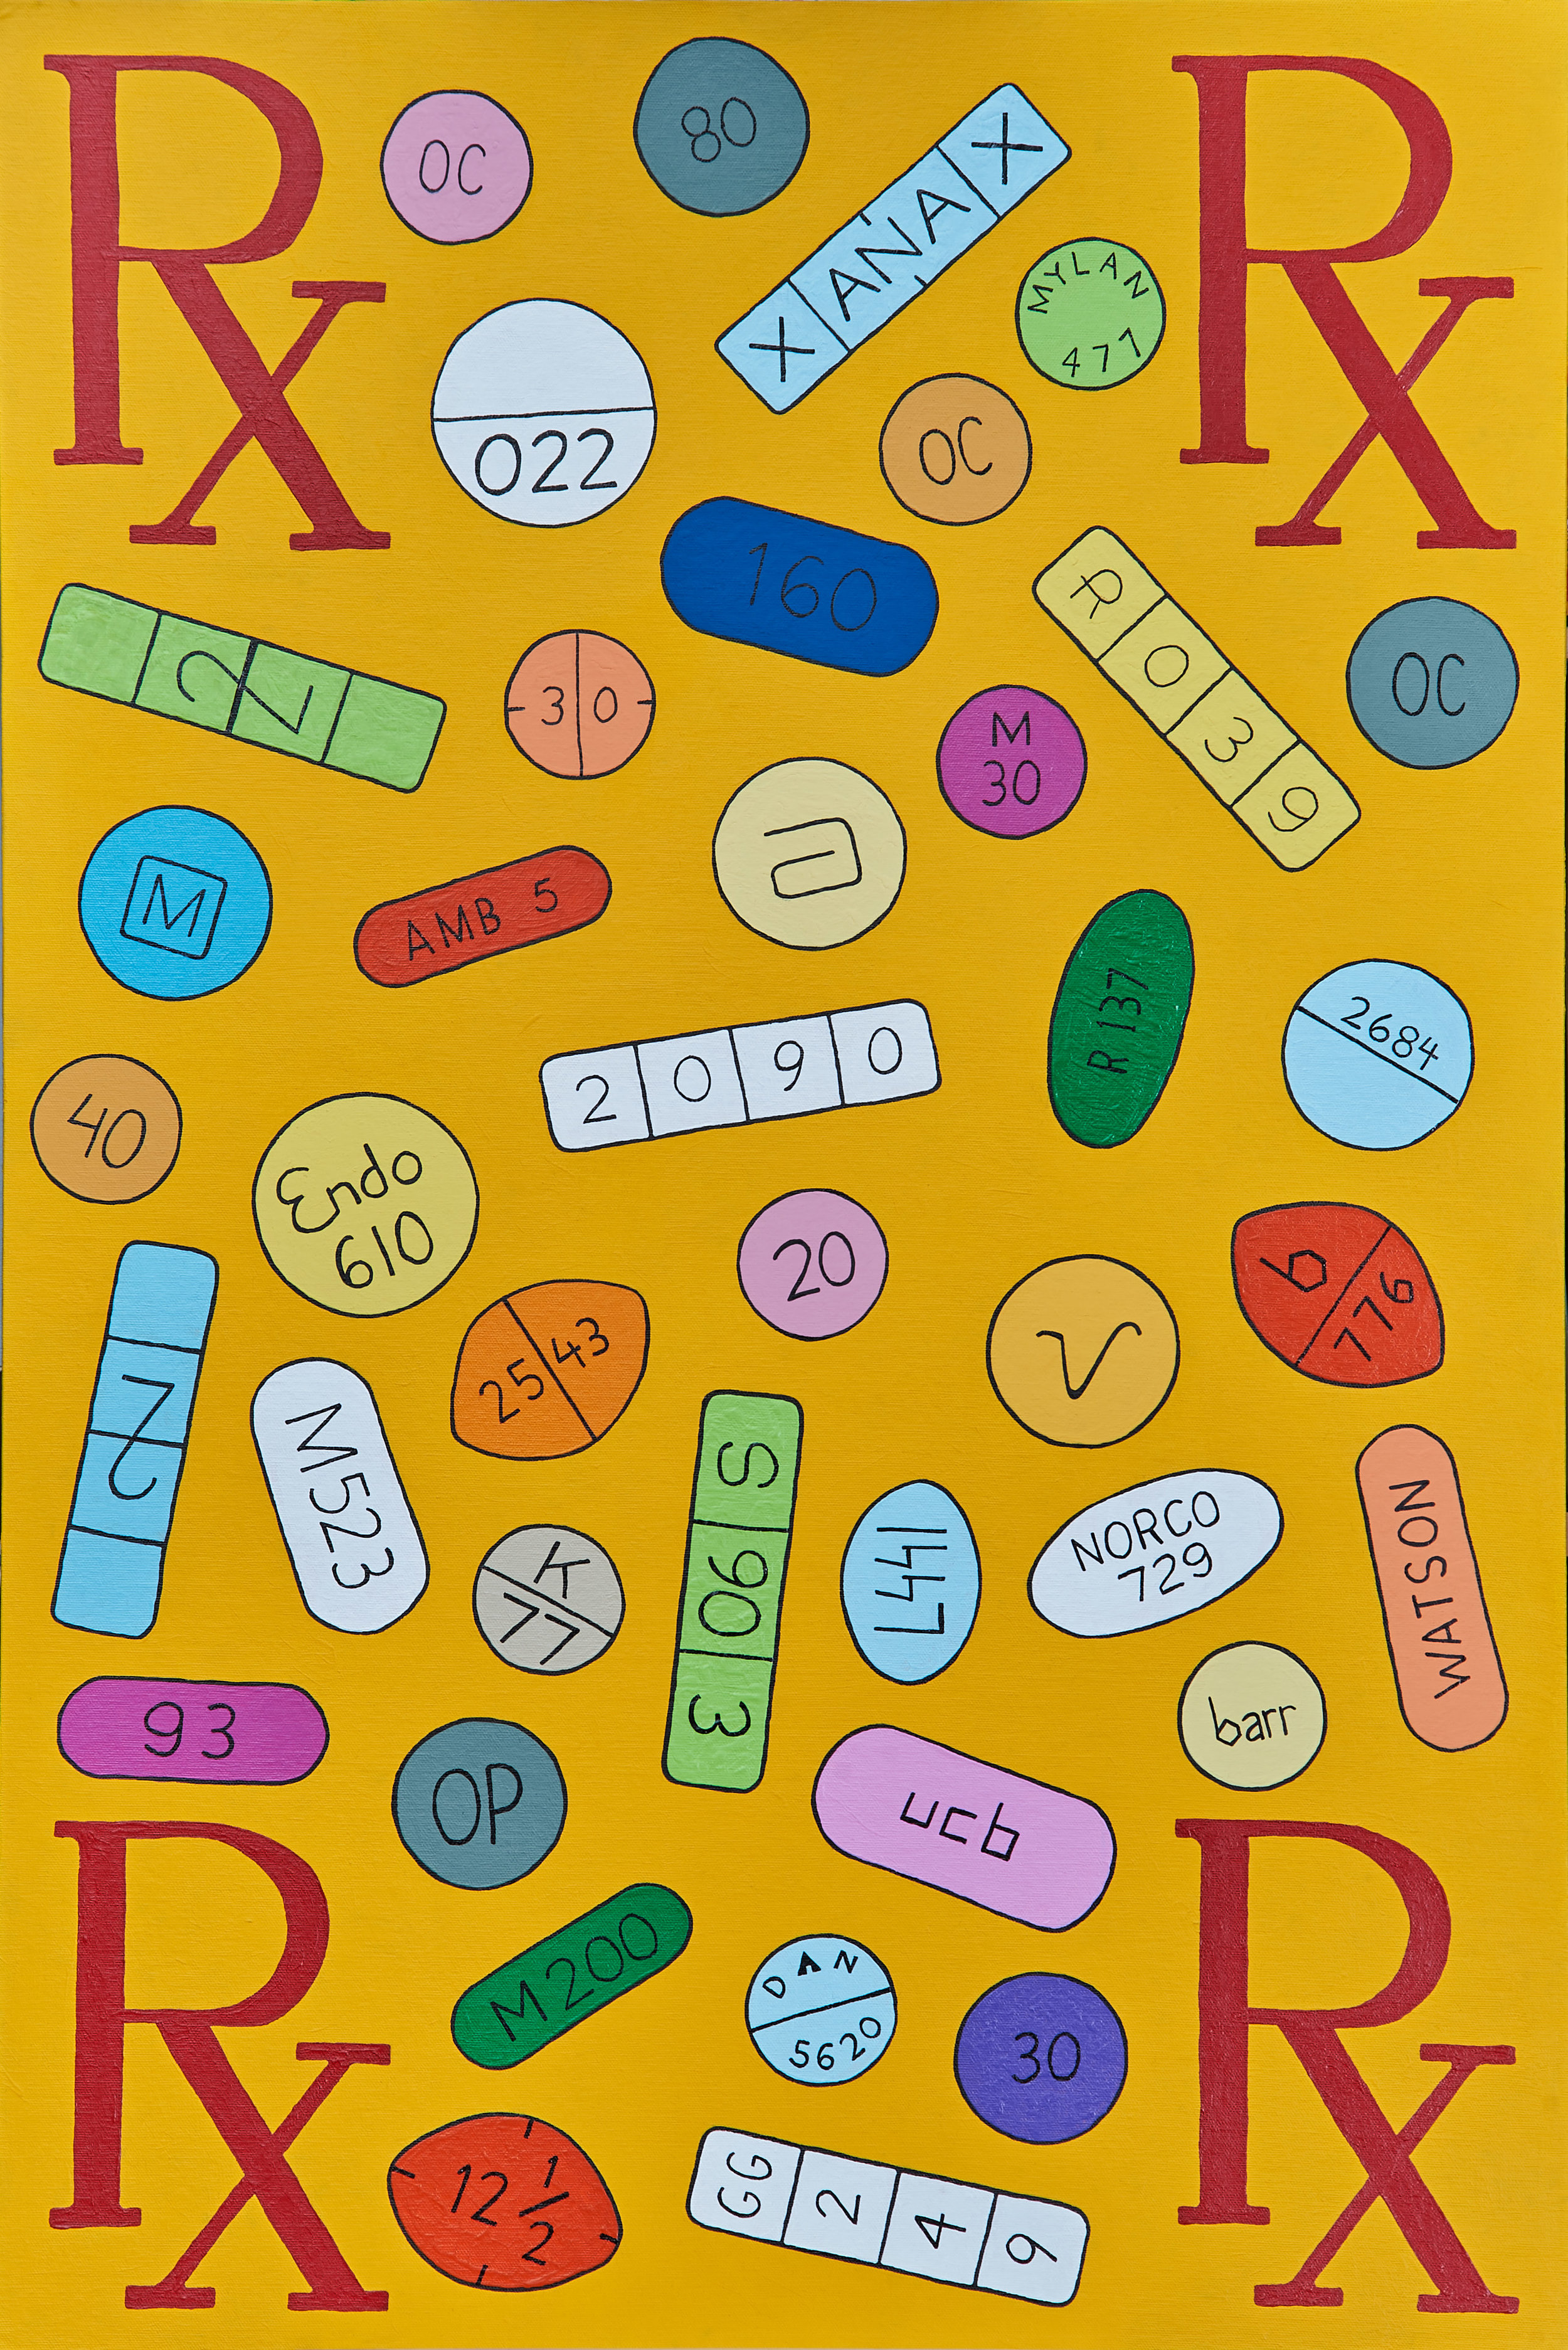 More Pills